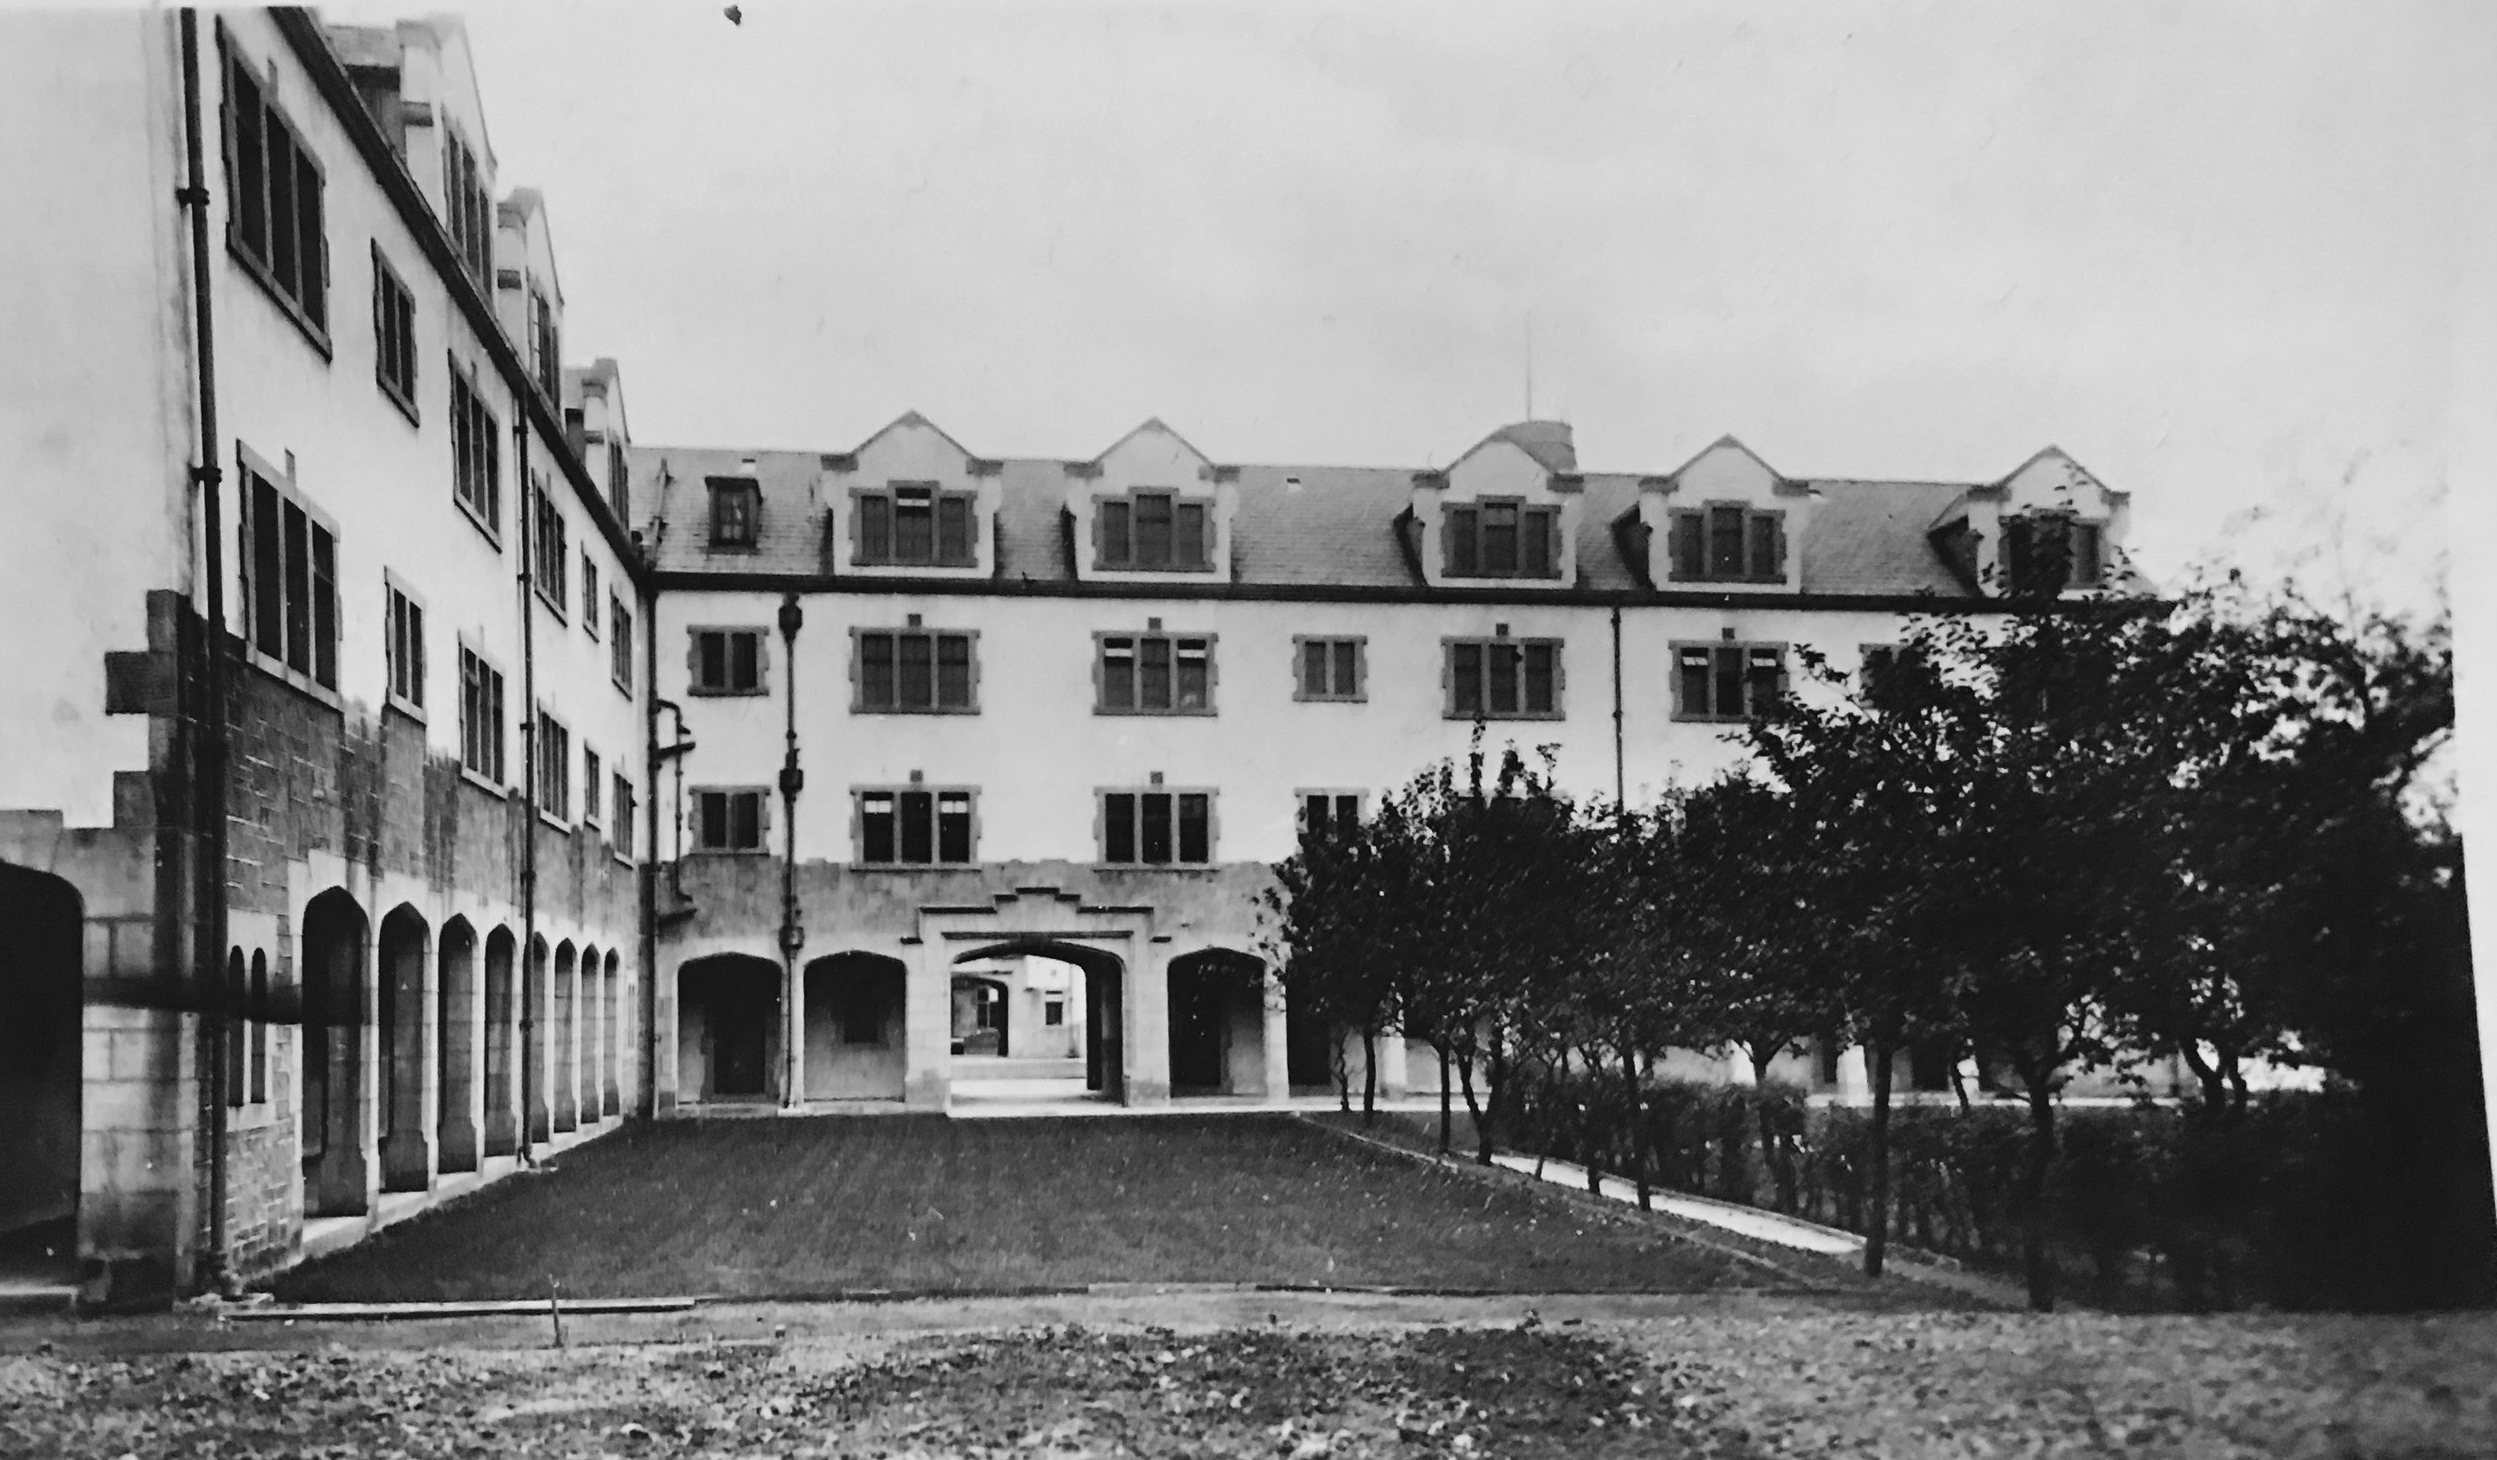 Cloisters North, Devonshire Hall, Cumberland Road, circa 1930